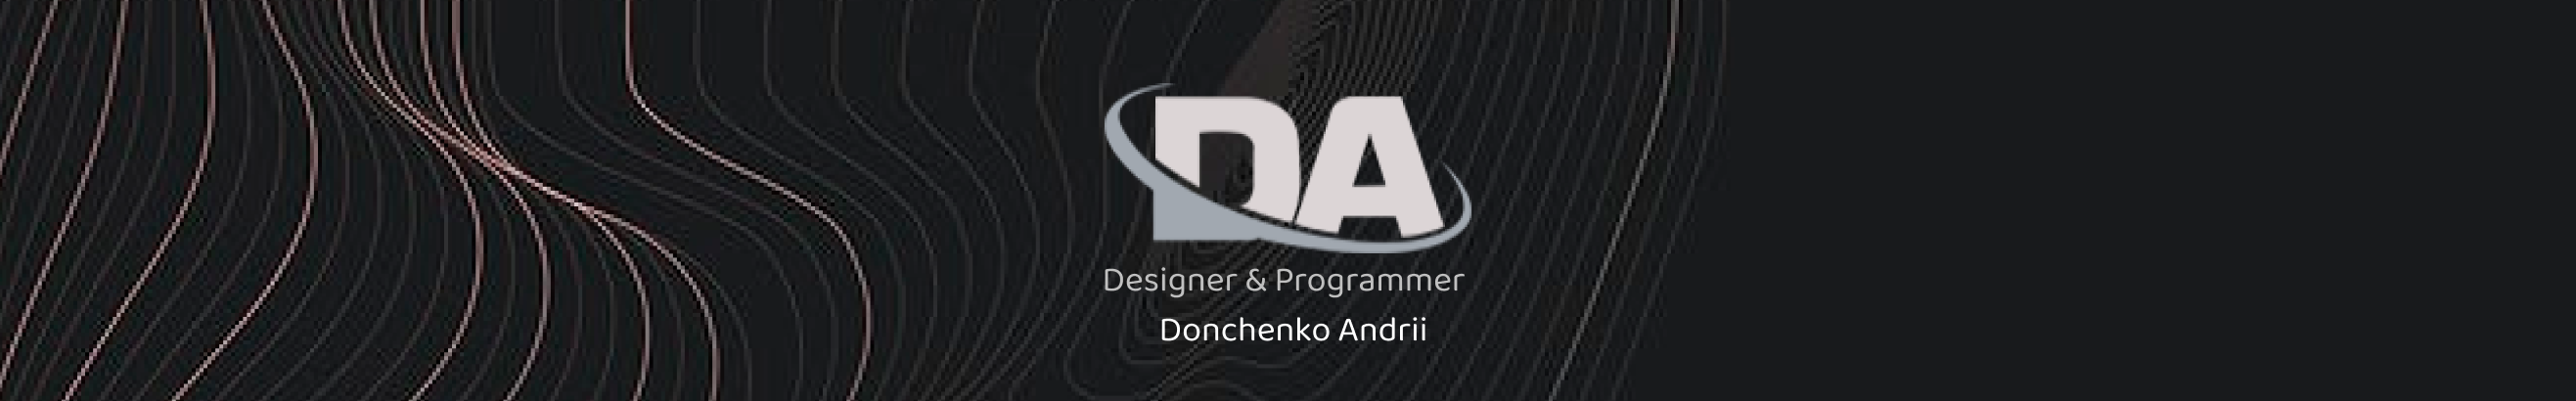 Andrii Donchenko profil başlığı